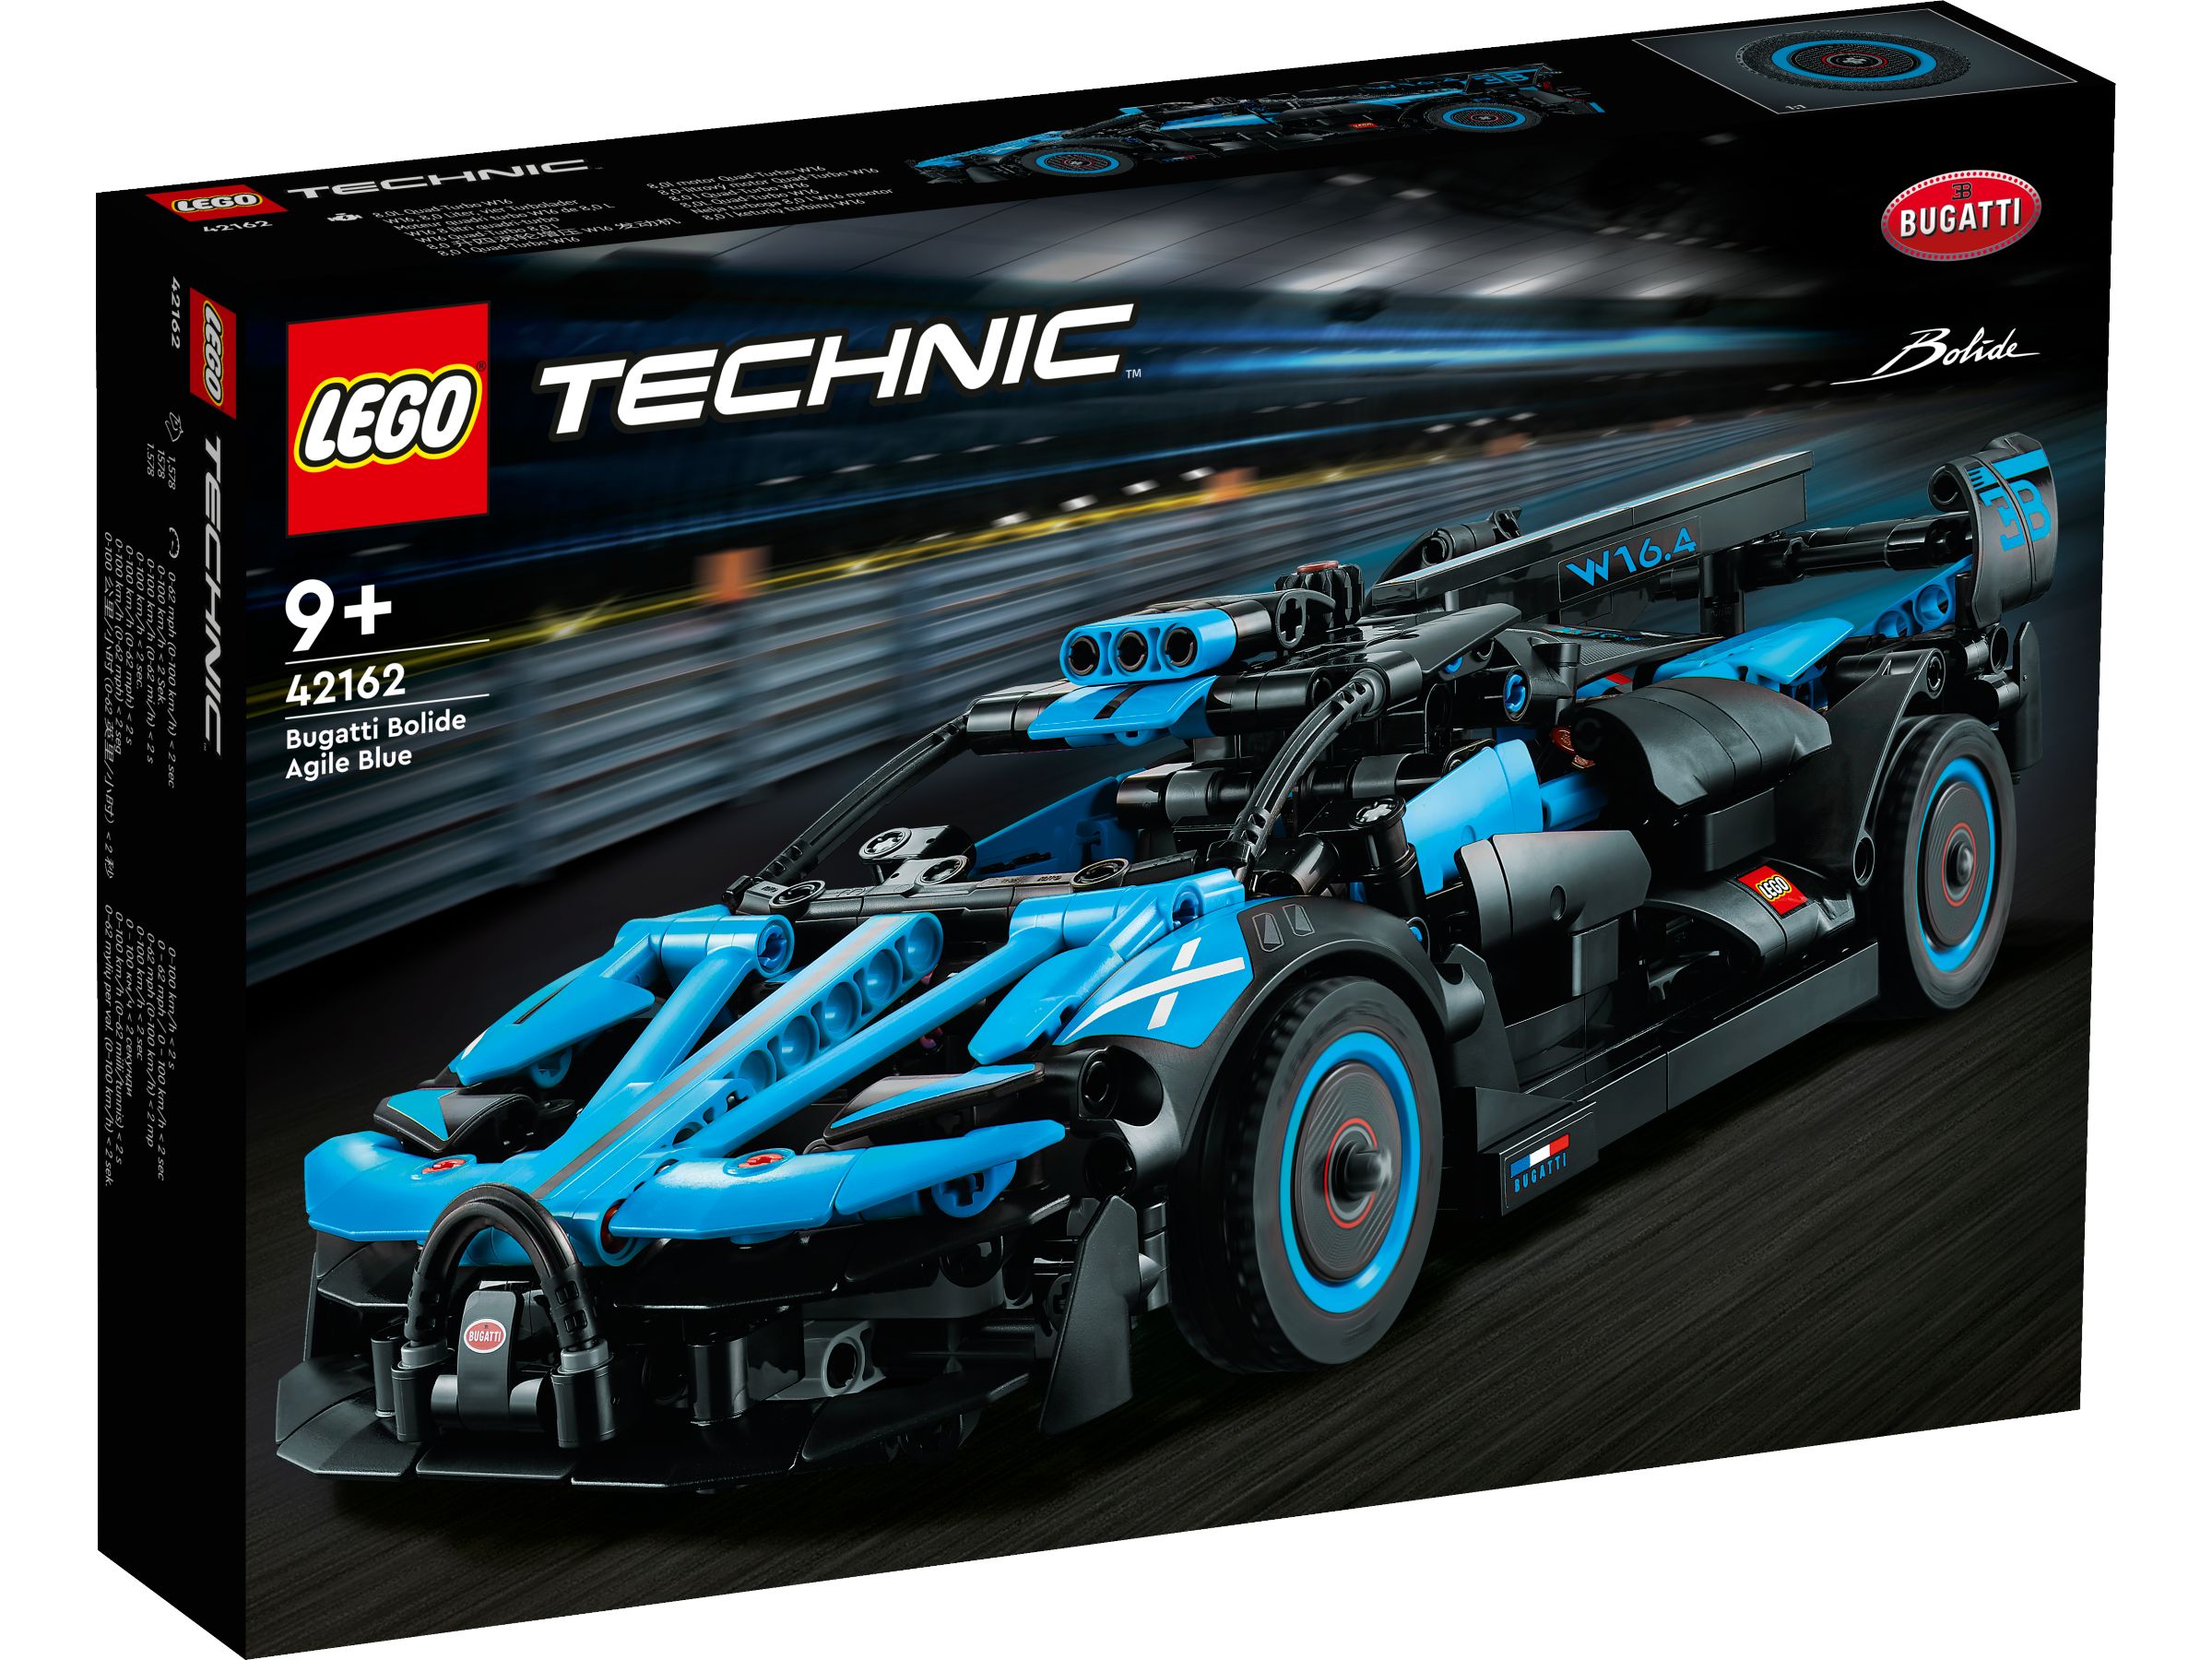 LEGO Technic 42162 Bugatti Bolide Agile Blue LEGO_42162_Box1_v29.jpg